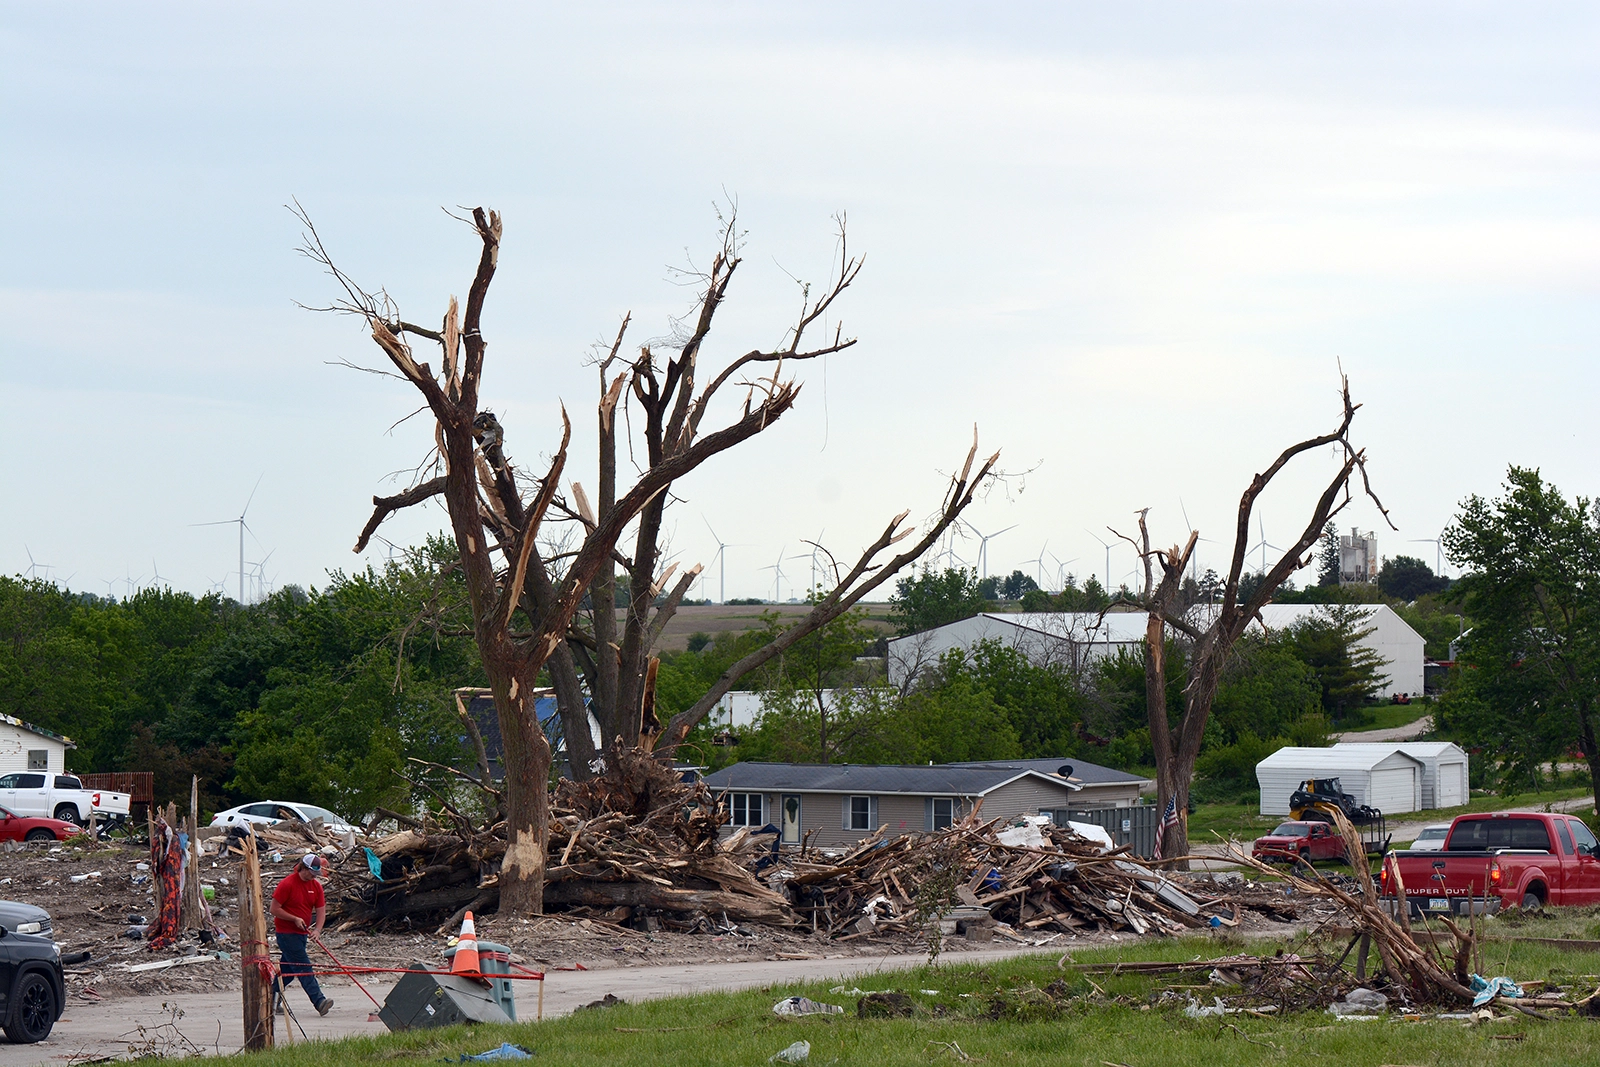 Damage from the Greenfield, Iowa tornado